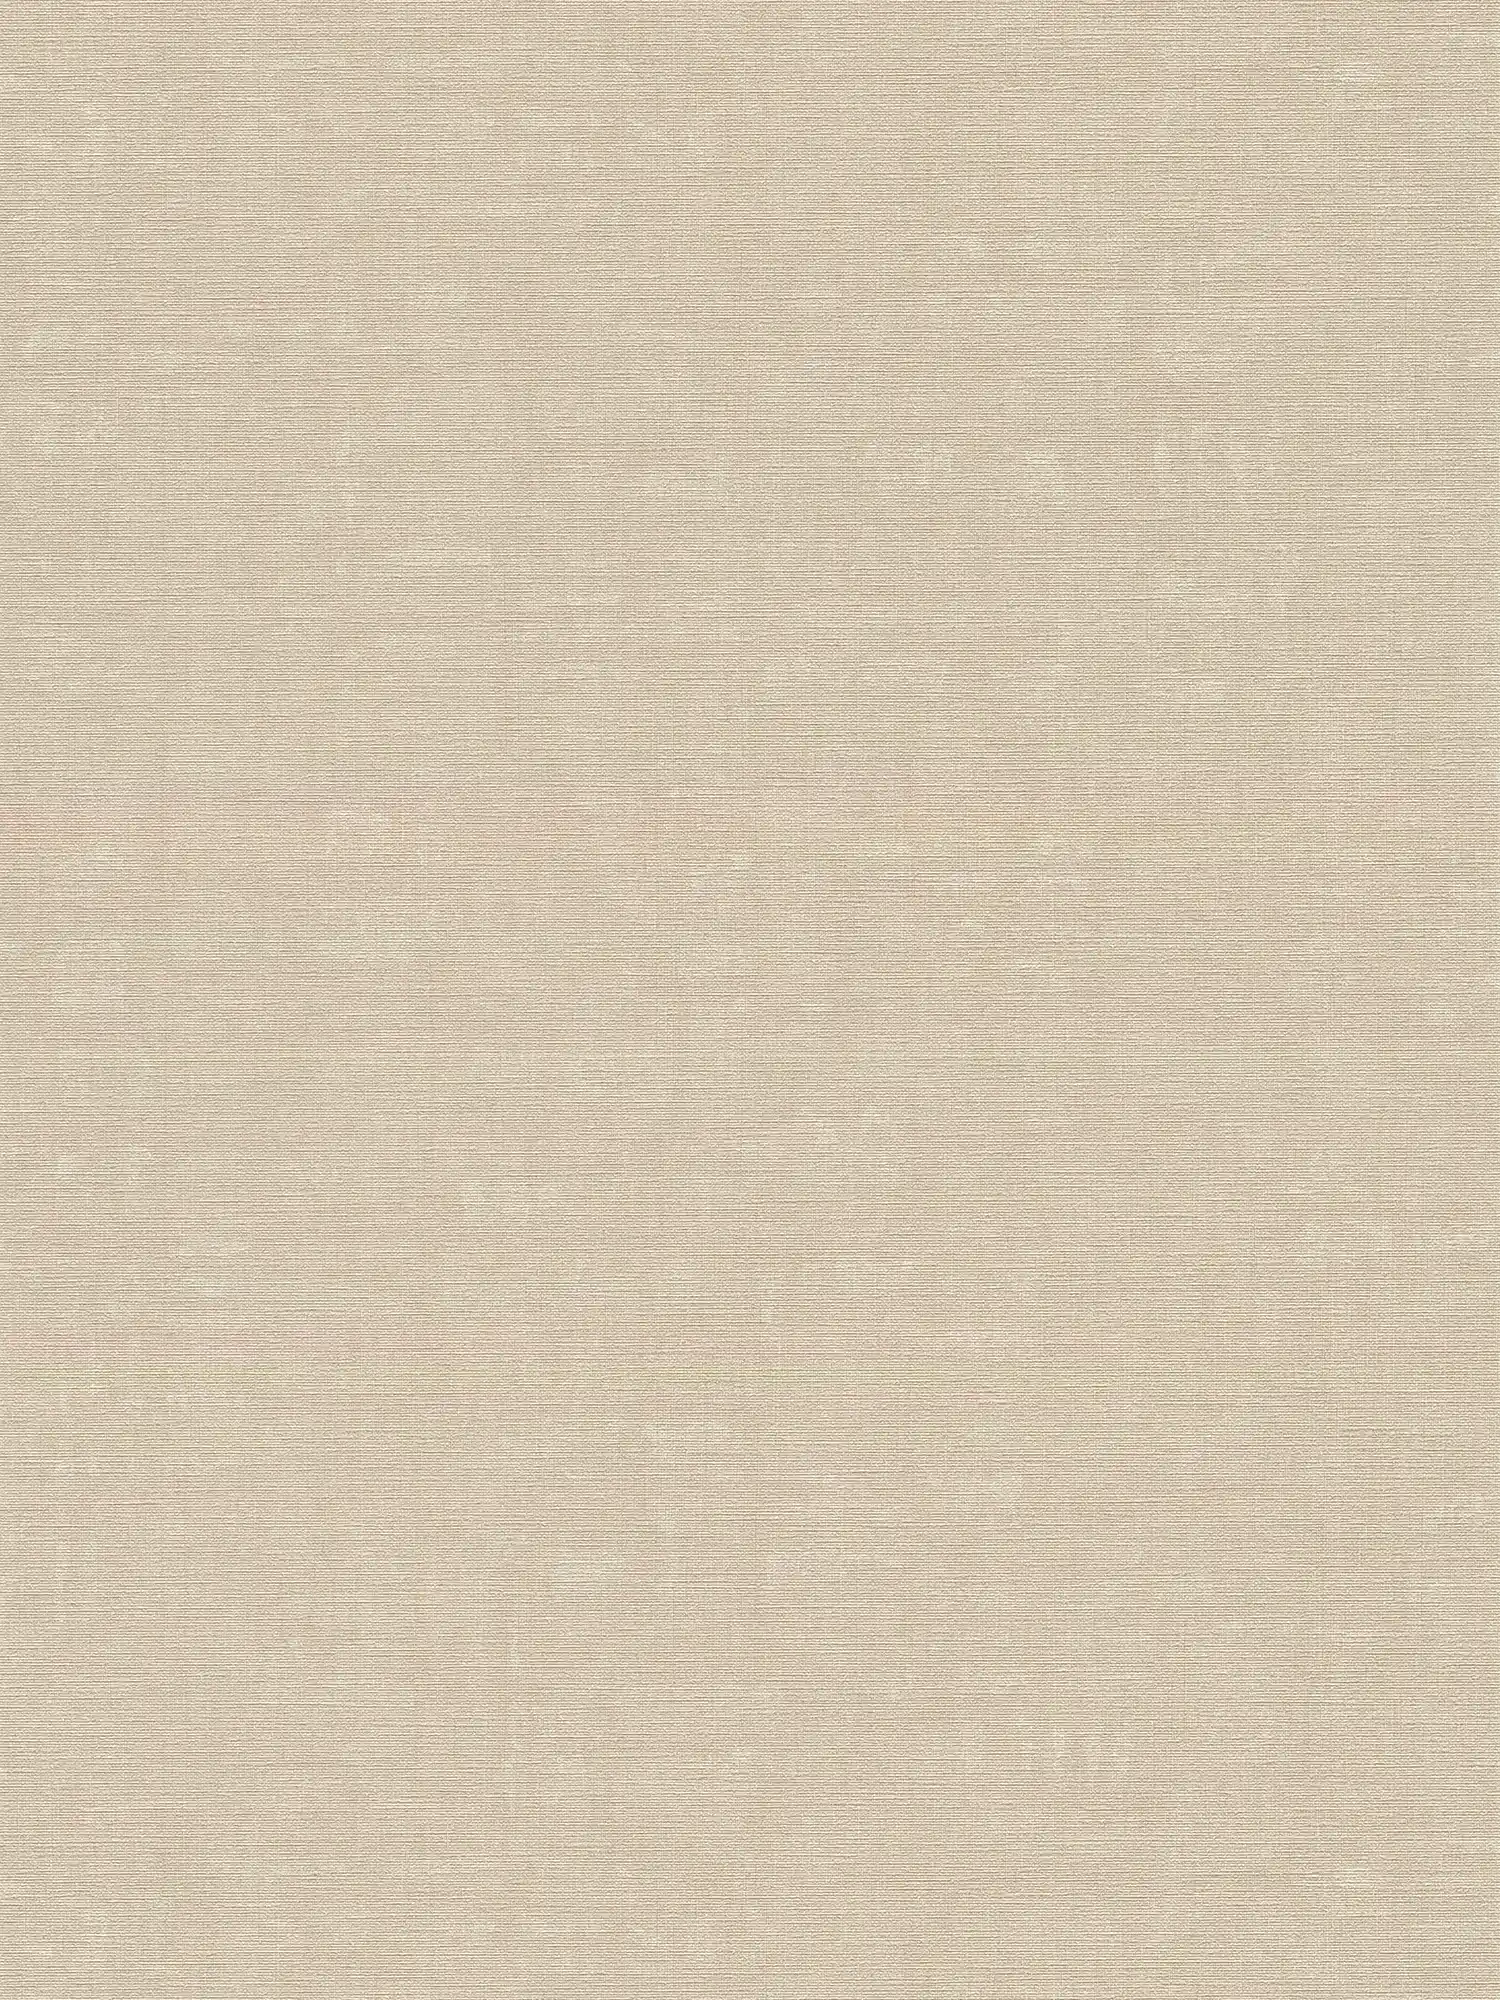 Melange wallpaper plain with structure design - grey, beige
